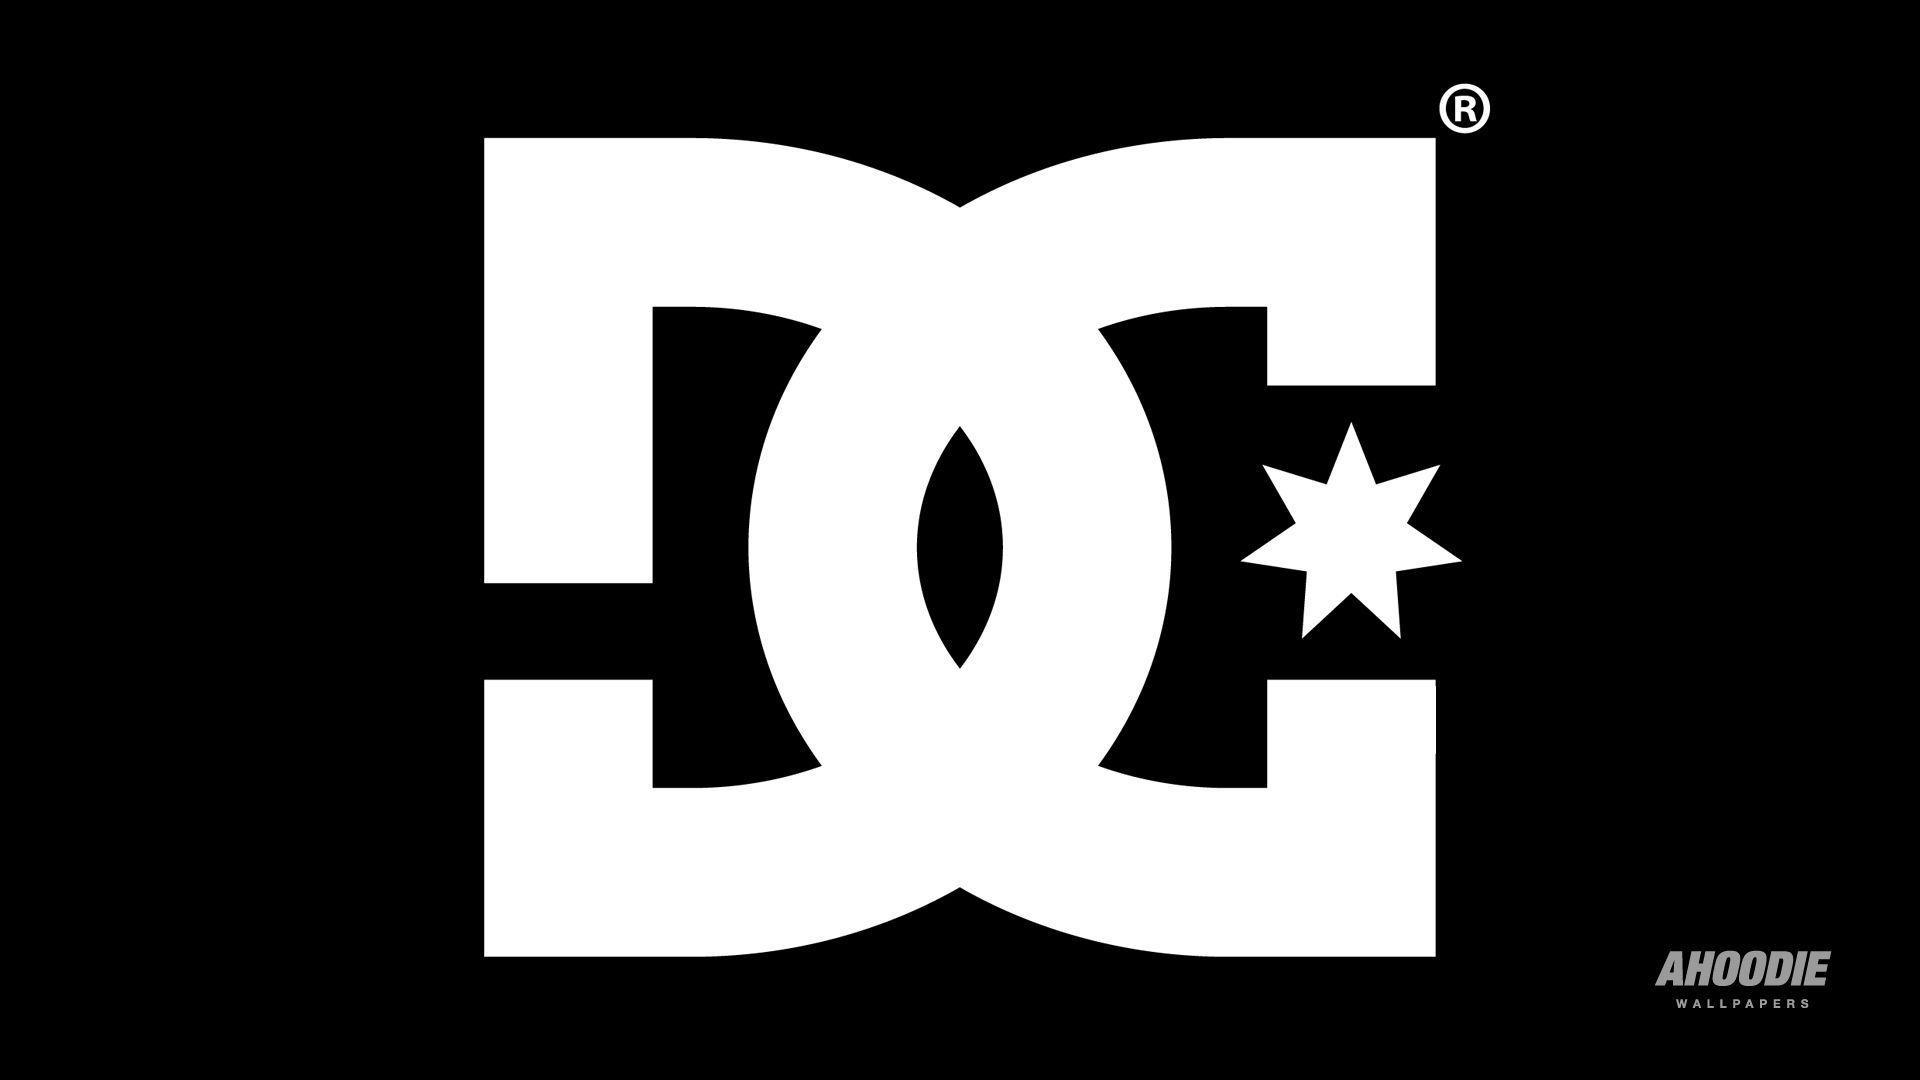 Dc Logo Wallpapers